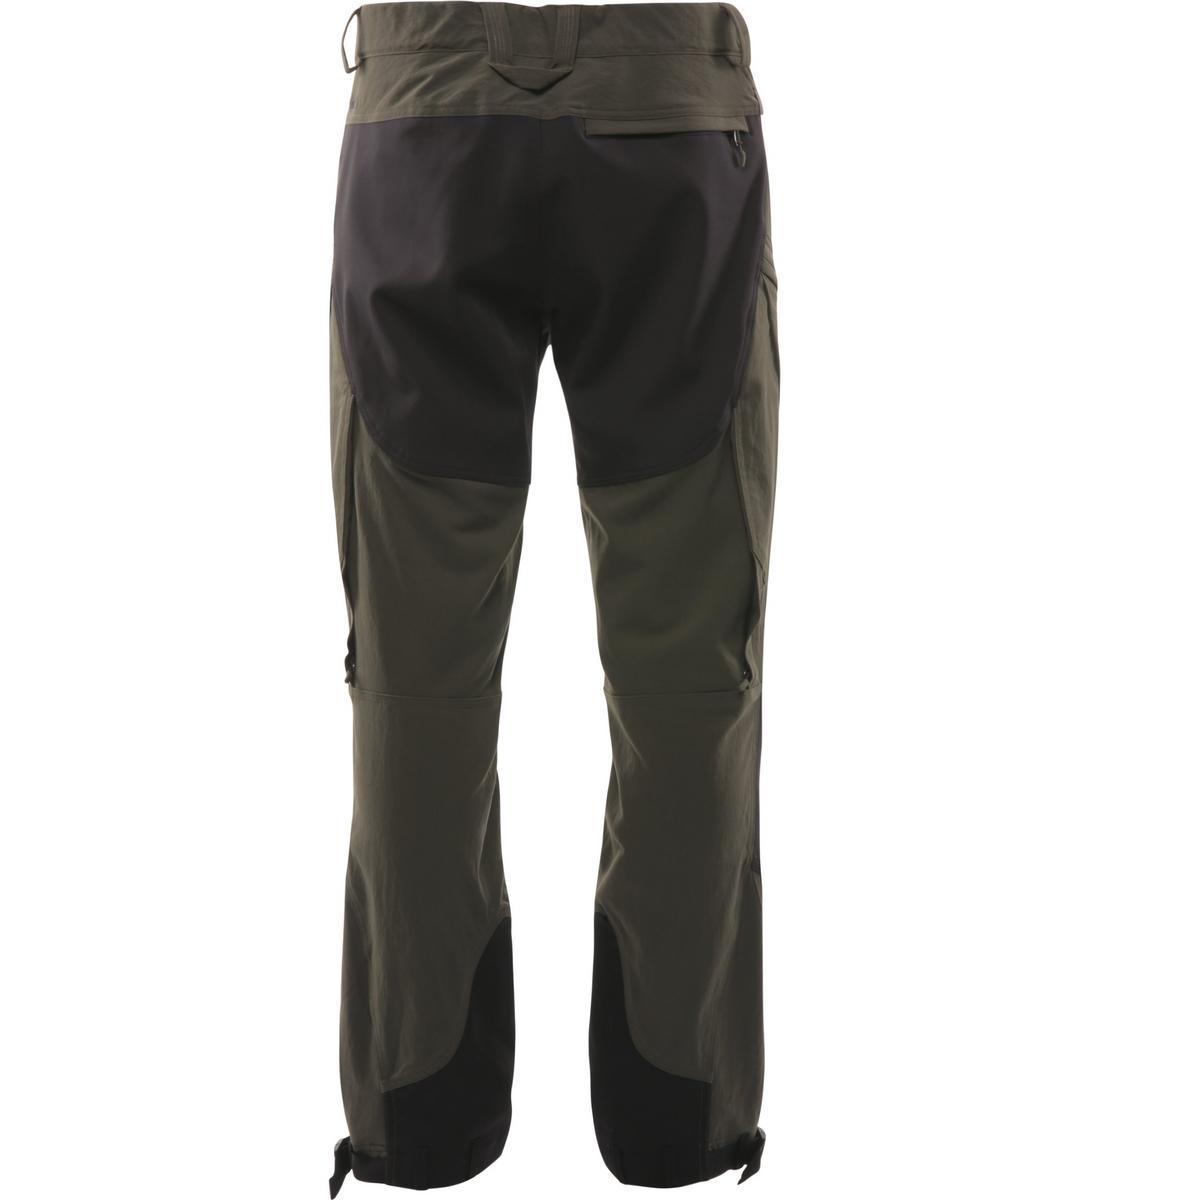 Haglofs Men's Rugged II Mountain Trouser | Regular - Deep Woods/Black